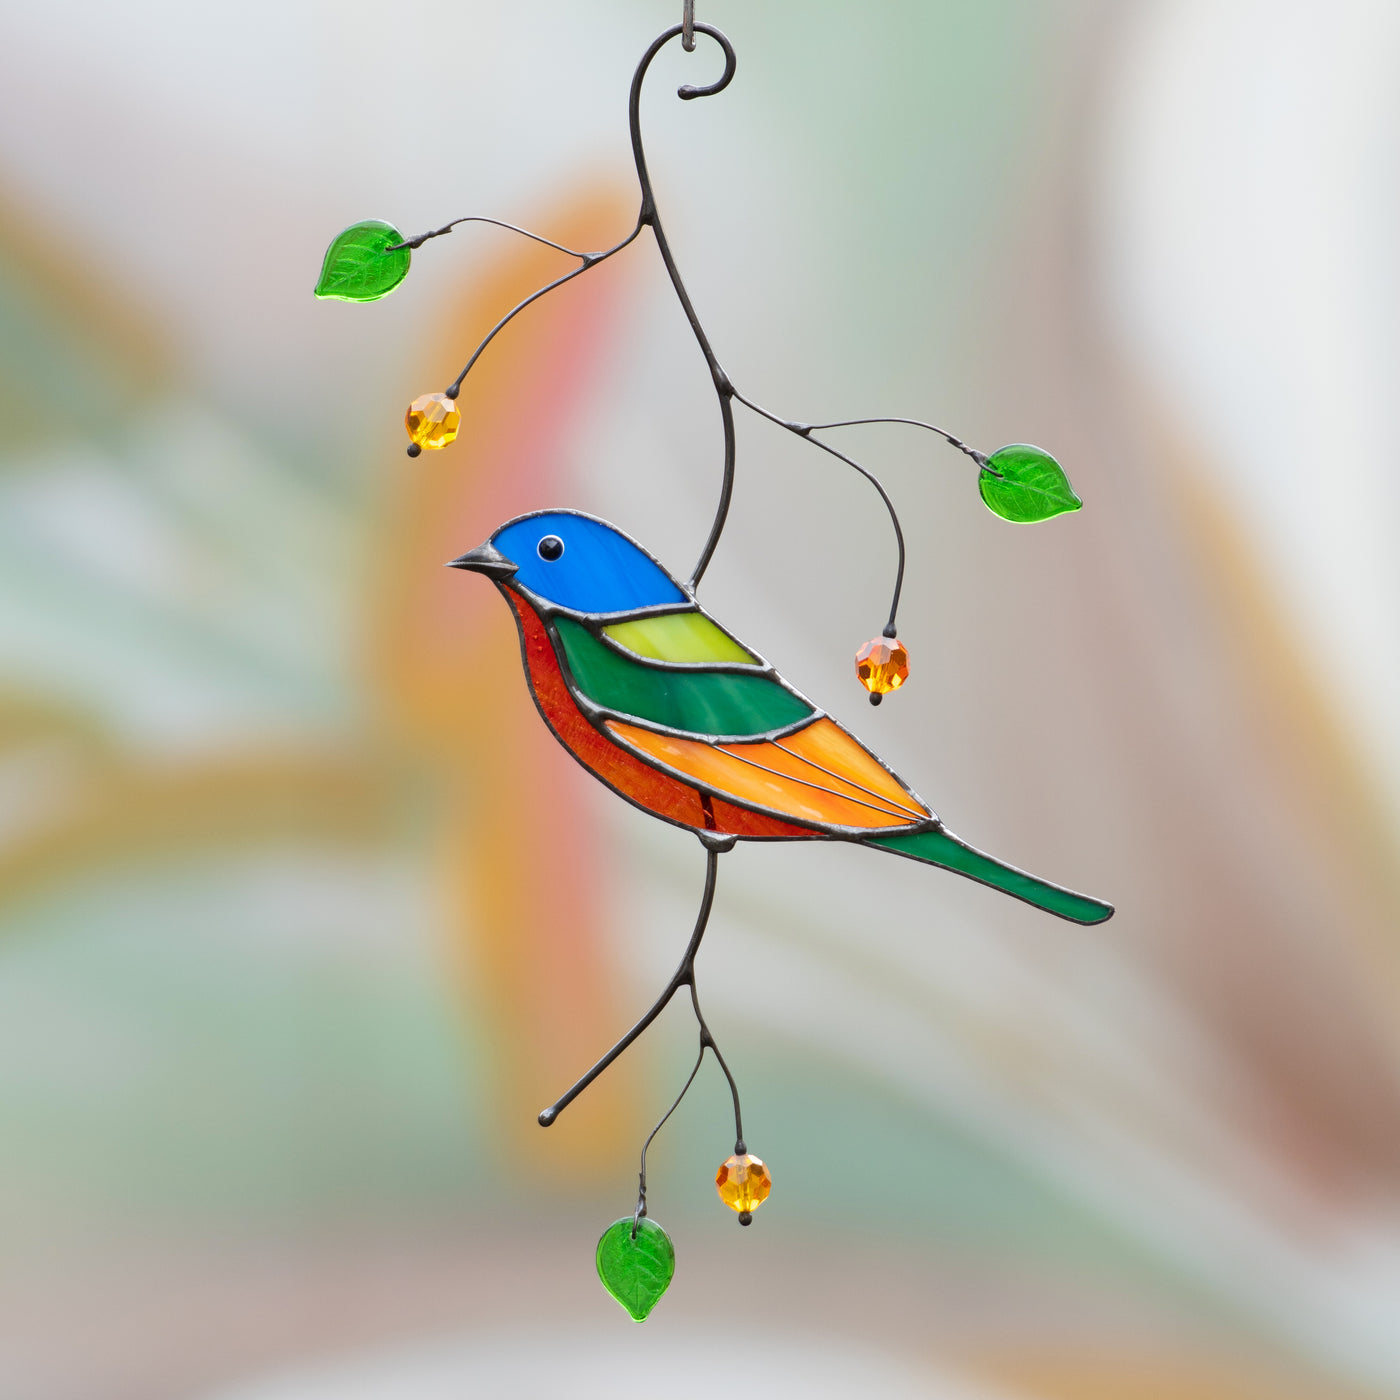 Stained glass handmade painting bunting bird window hanging